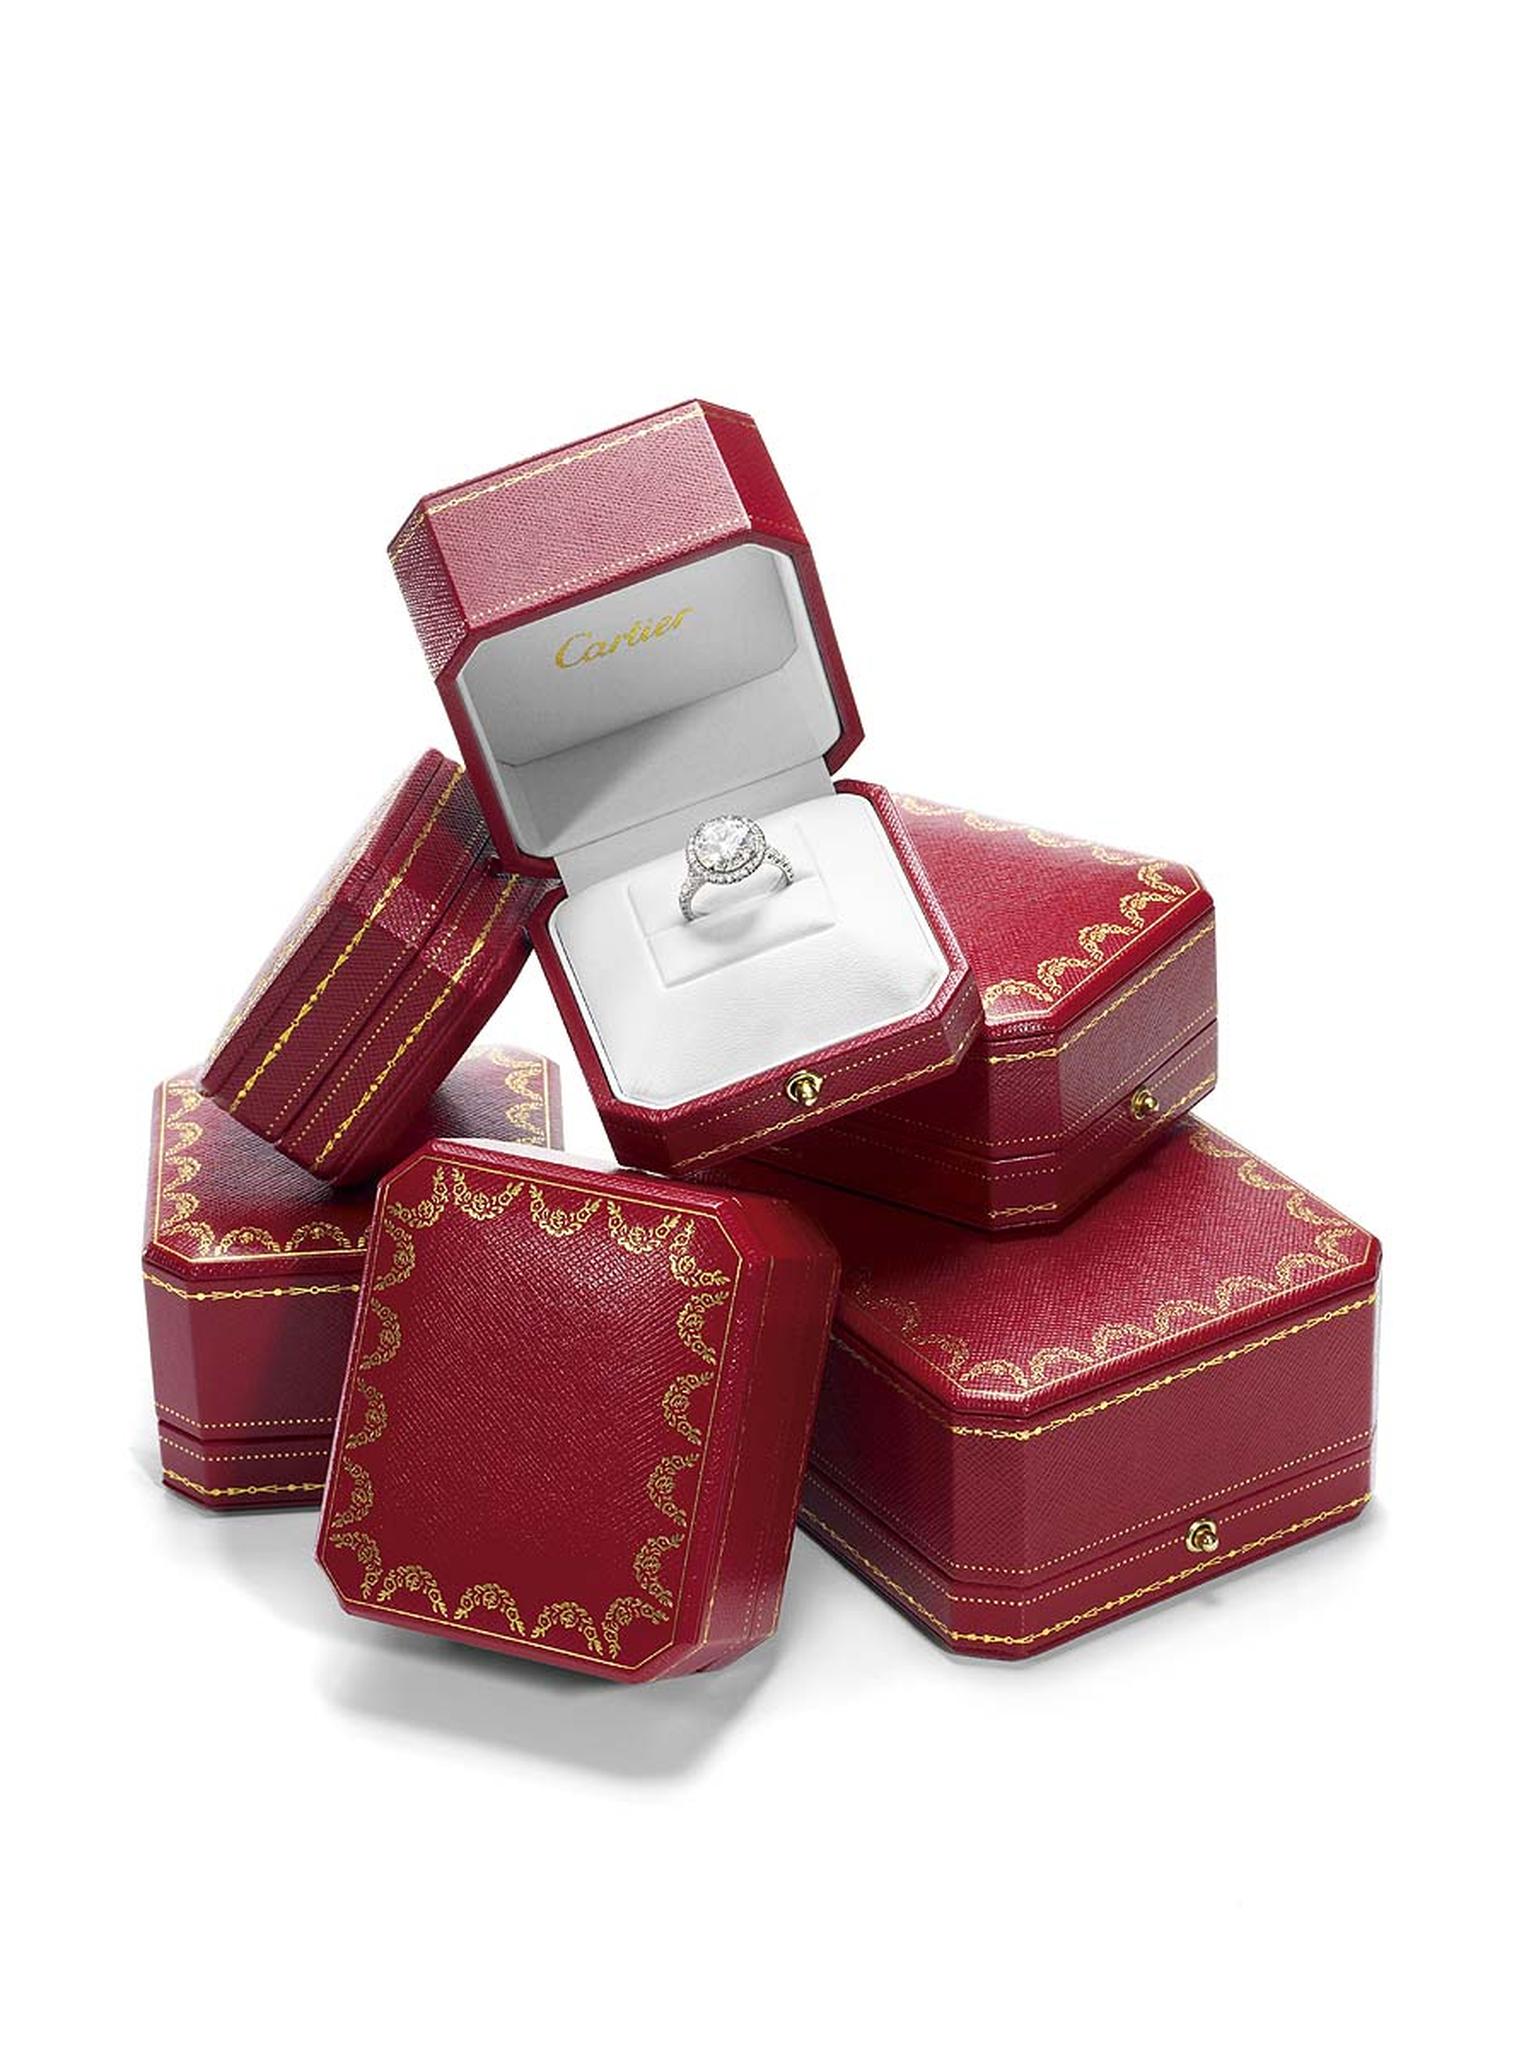 Cartier bridal experience 